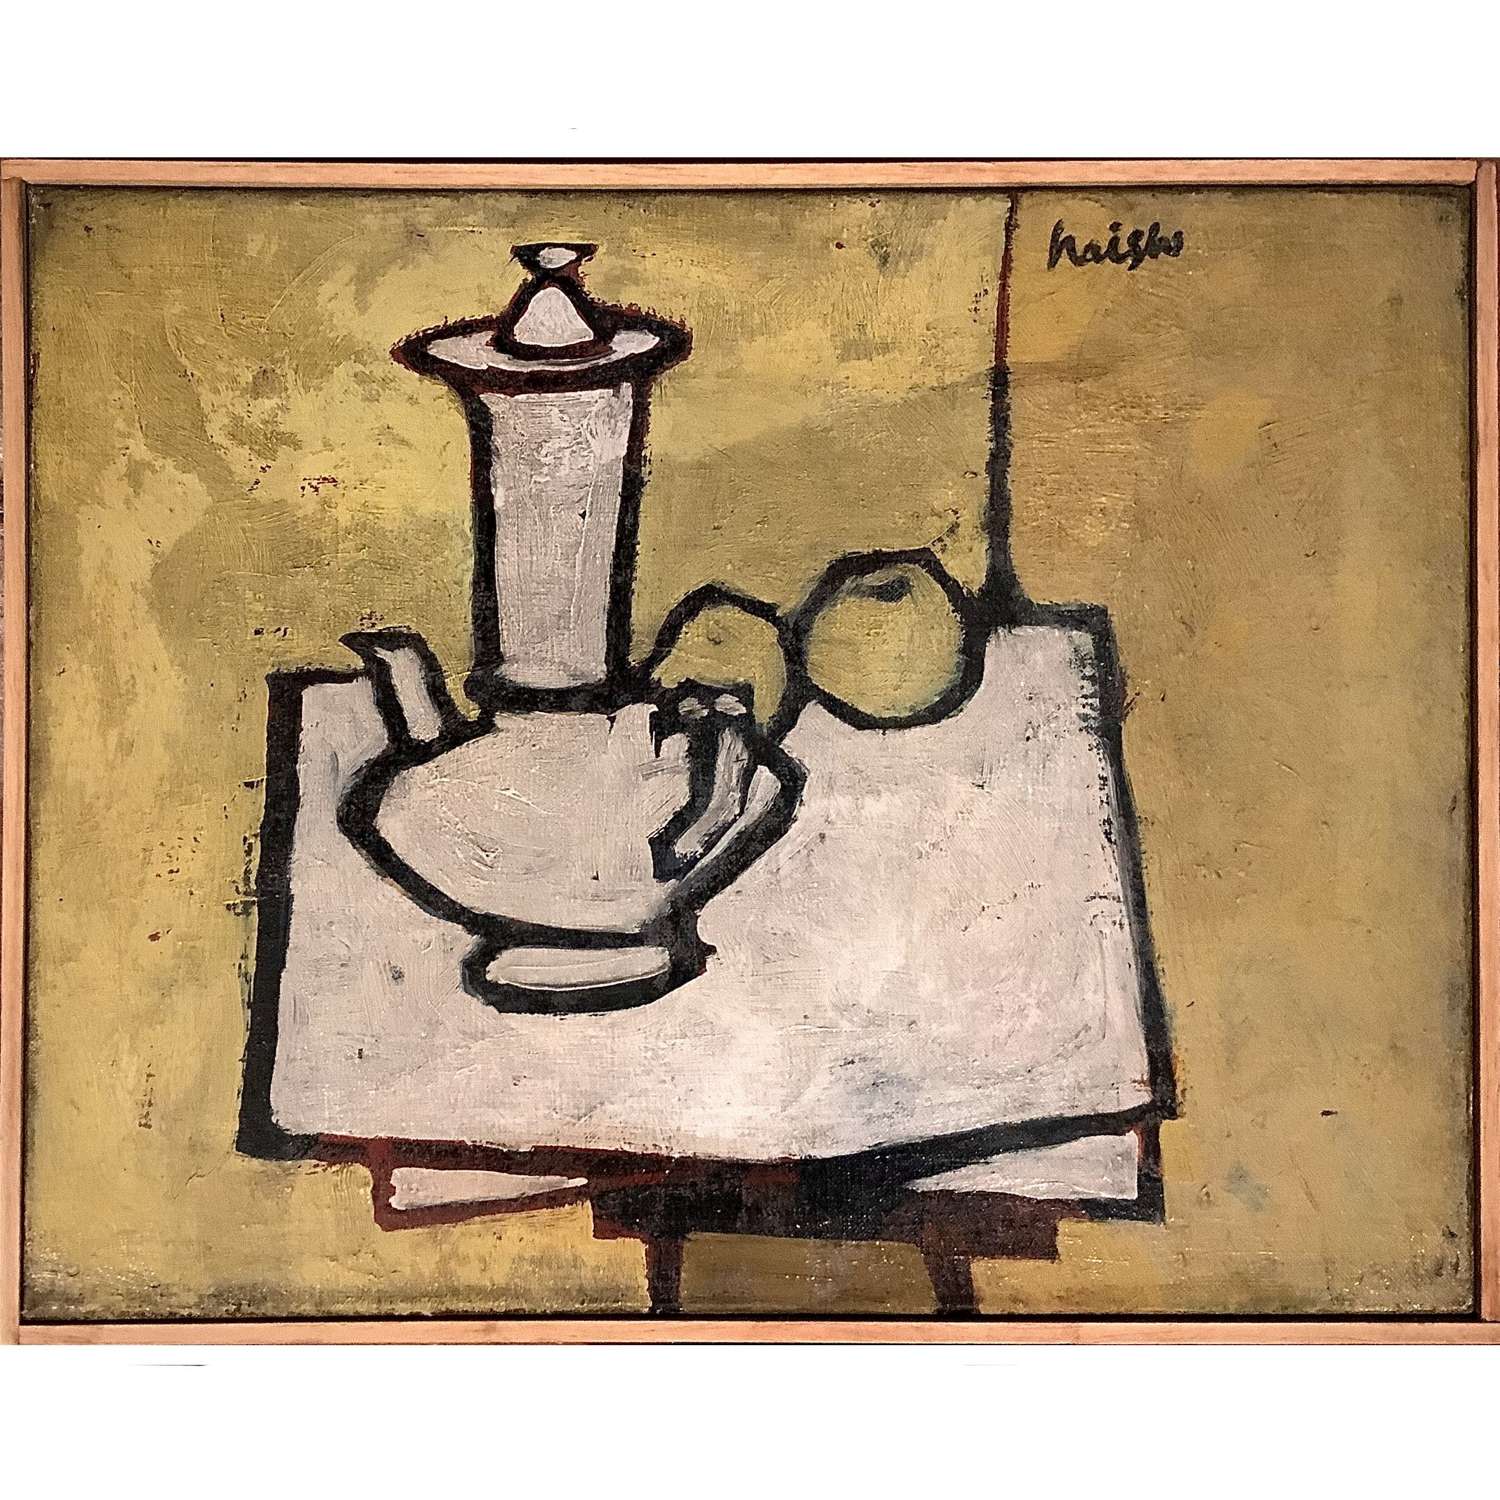 Peter Haigh (1914-1994), “Coffee Pot & Apples”, Circa 1952